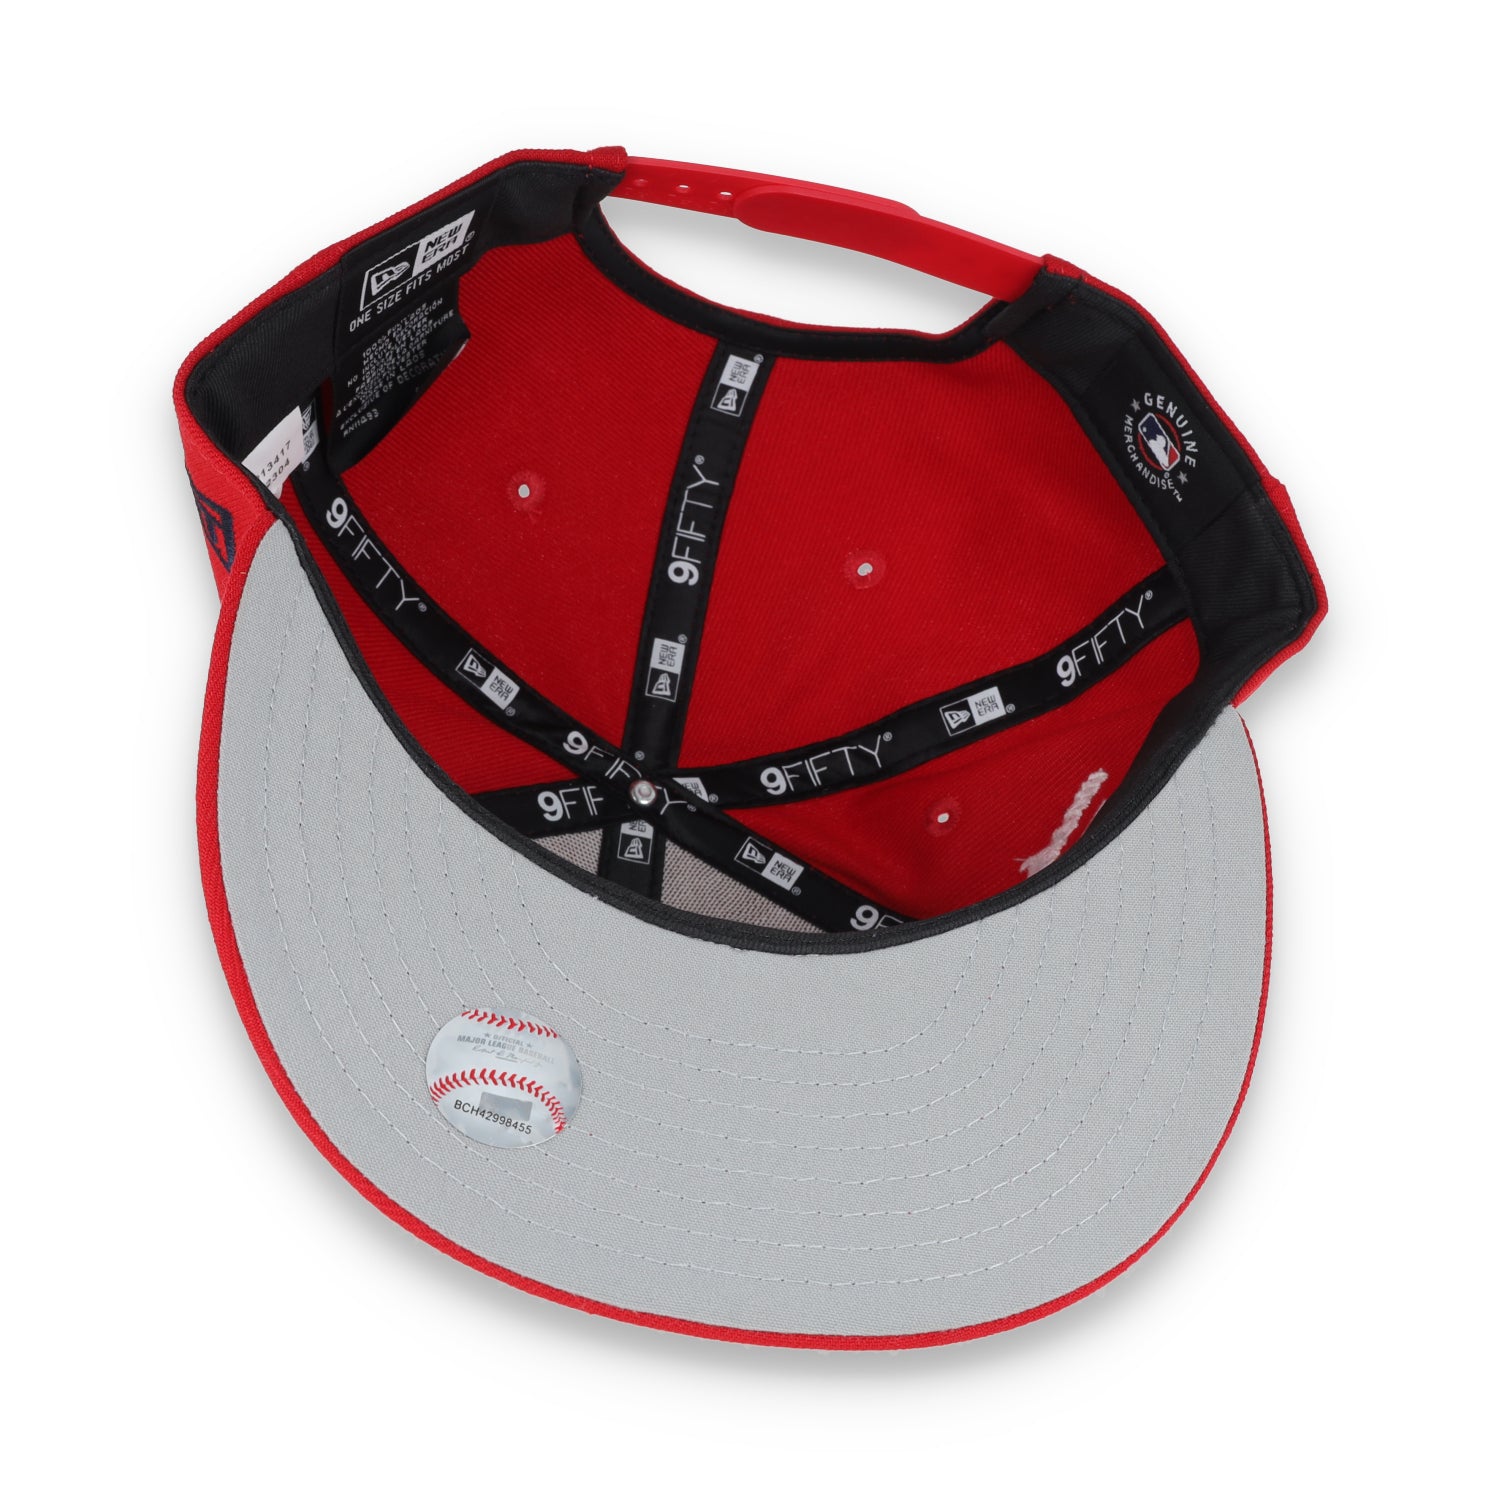 New Era Washington Nationals Icon E1 9Fifty Snapback Hat-Red